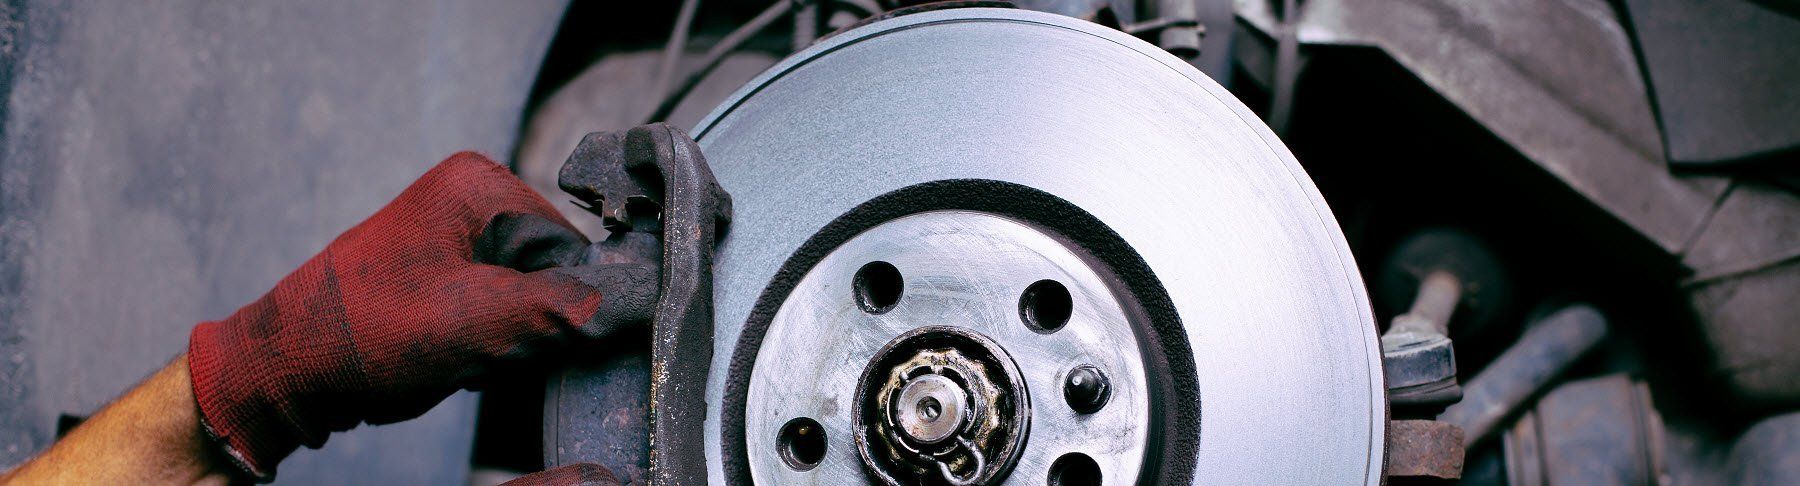 Brake replacement and repairs in Newbury Berkshire